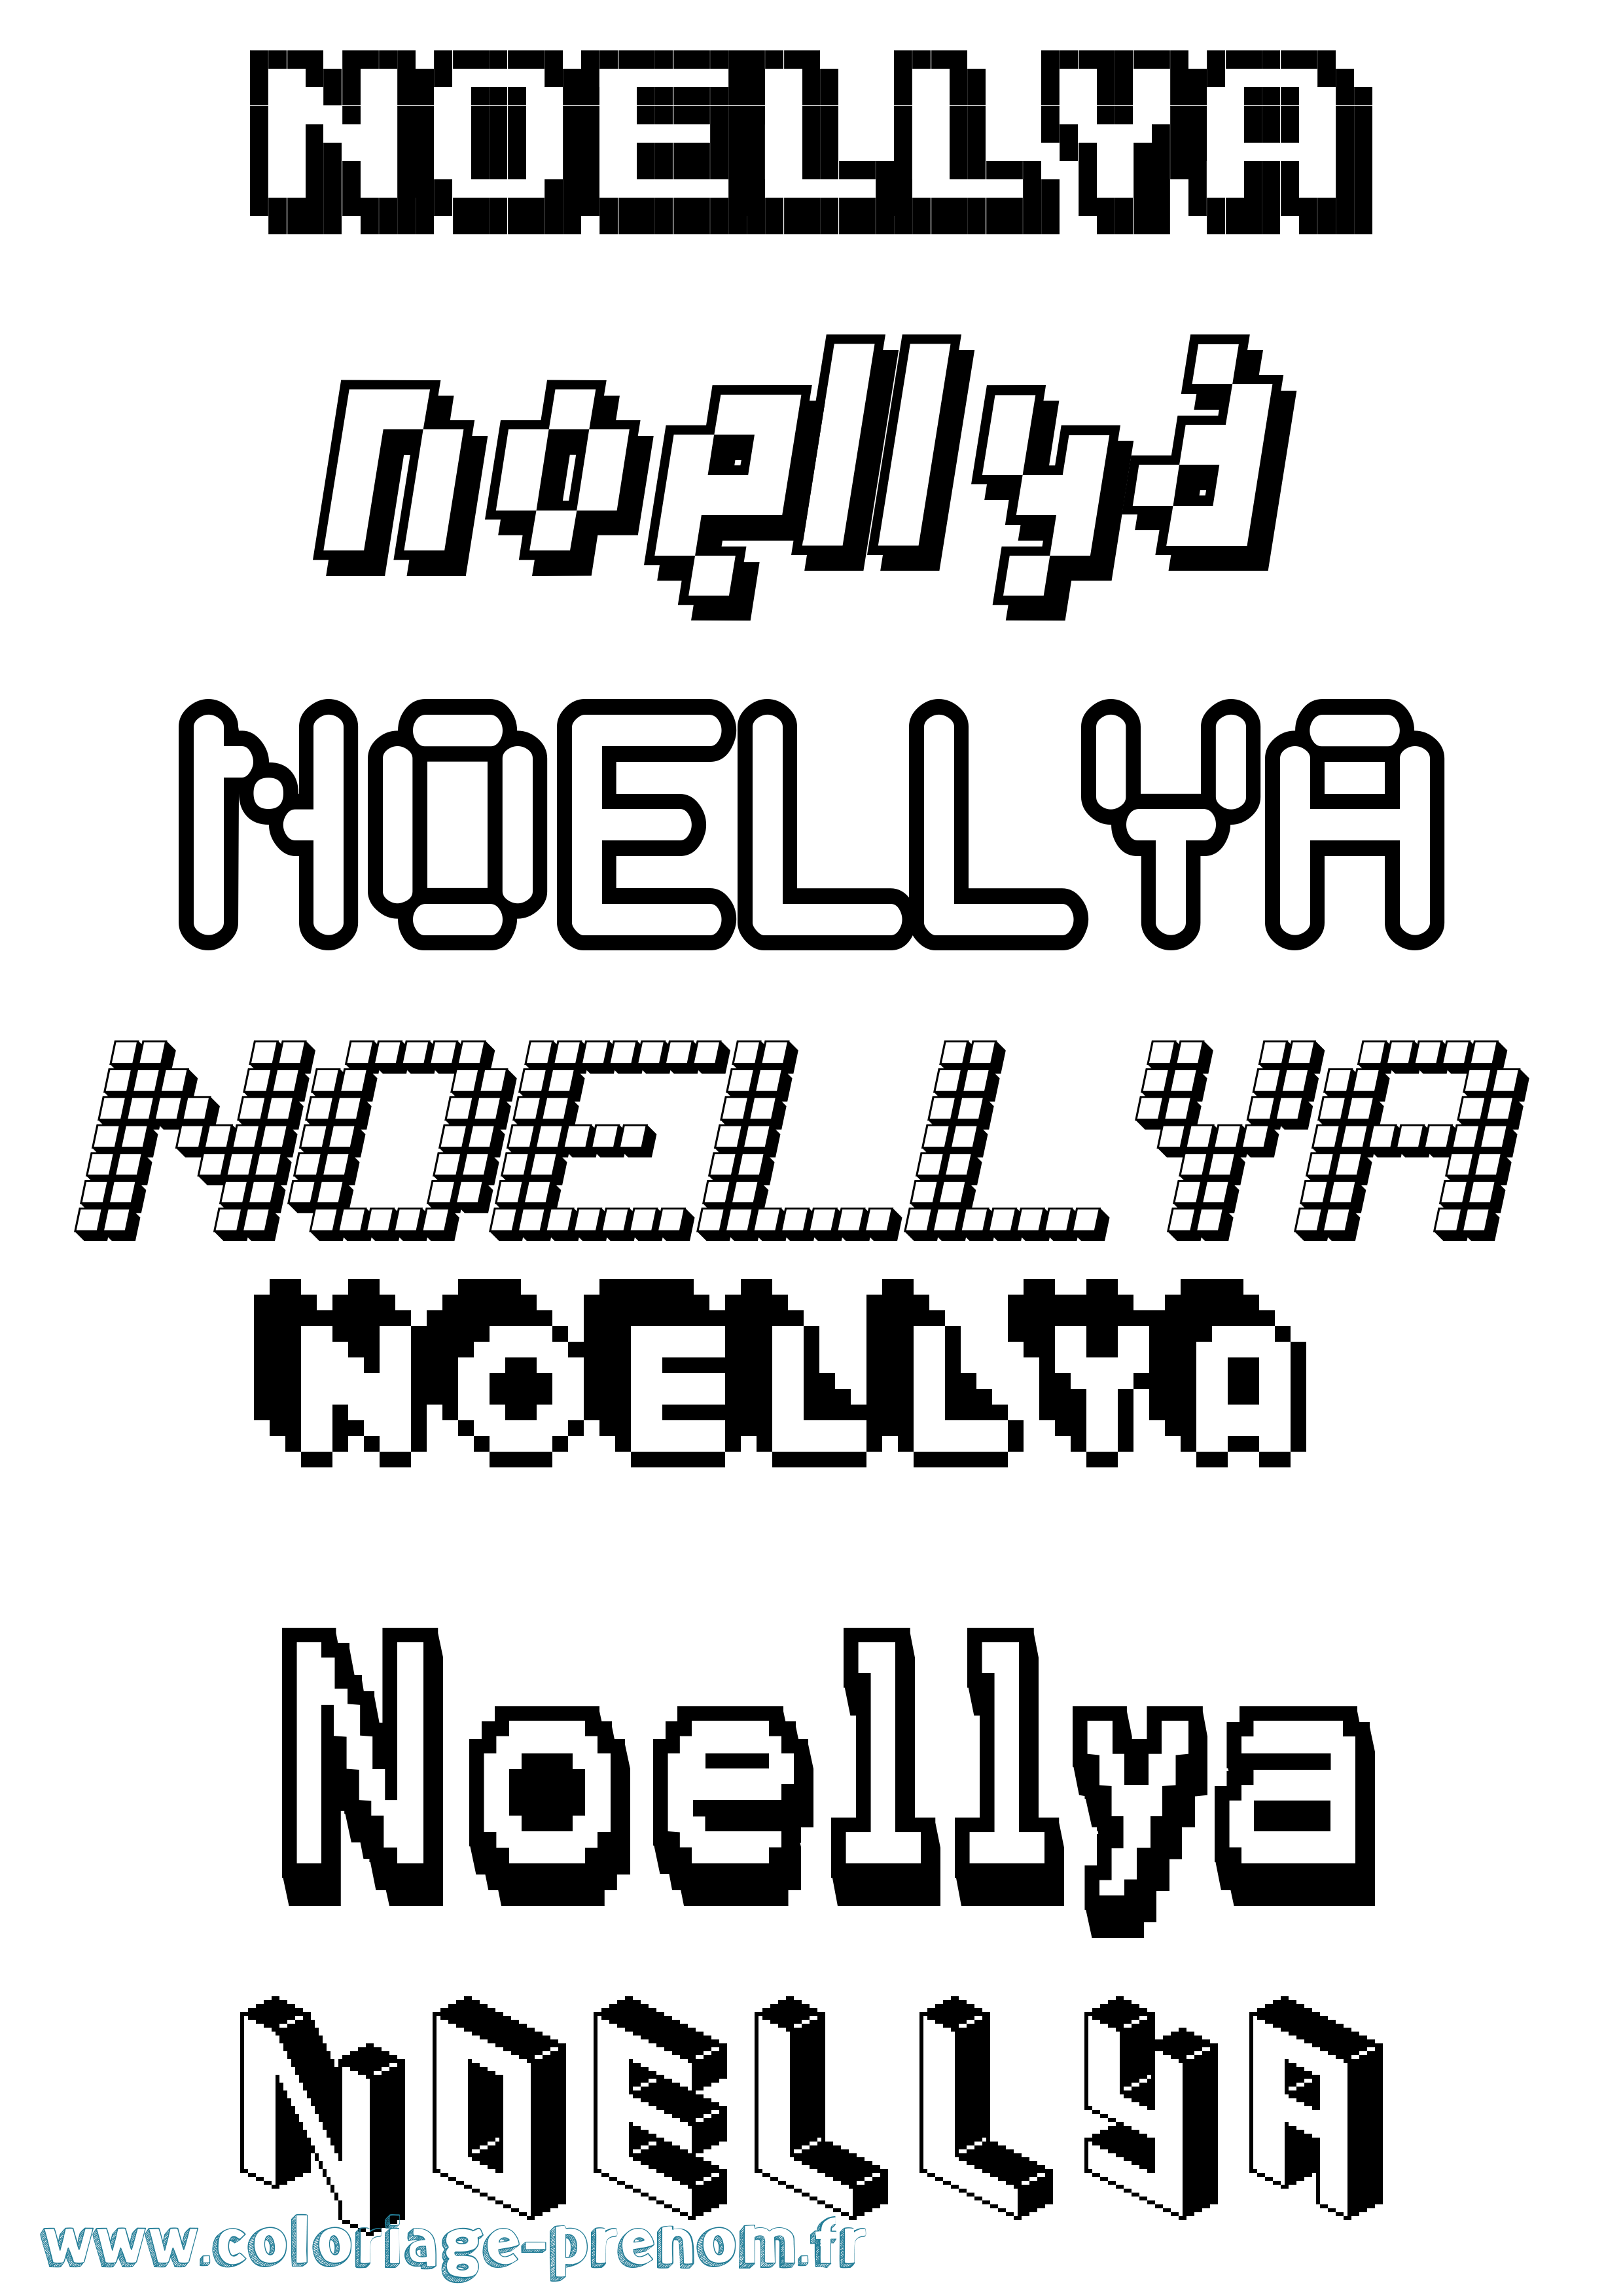 Coloriage prénom Noellya Pixel